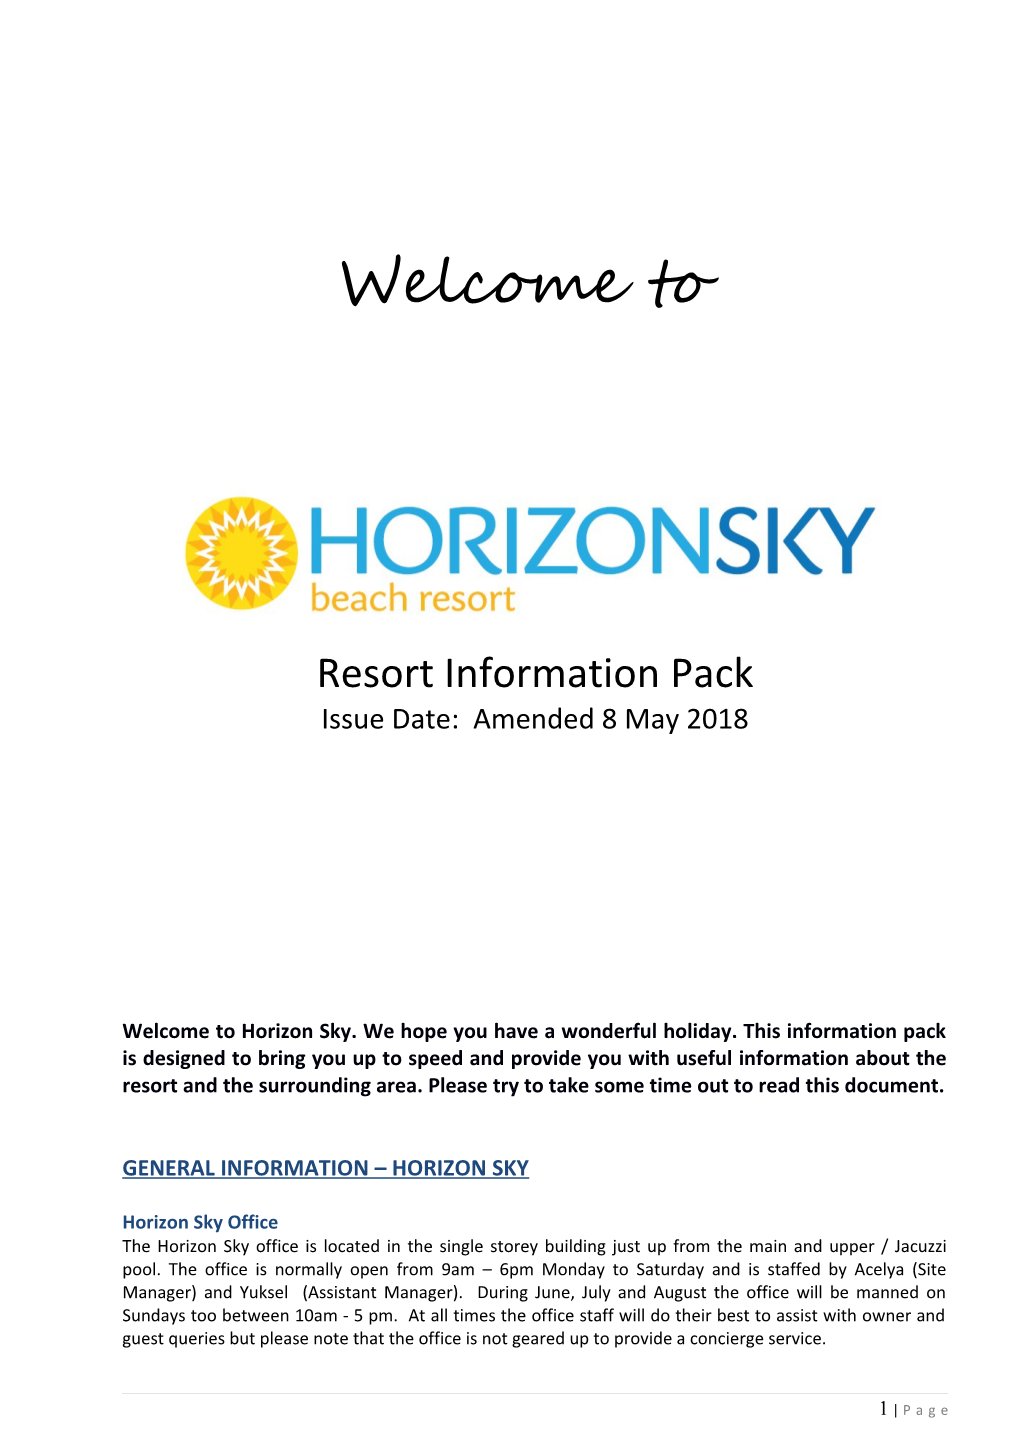 General Information Horizon Sky